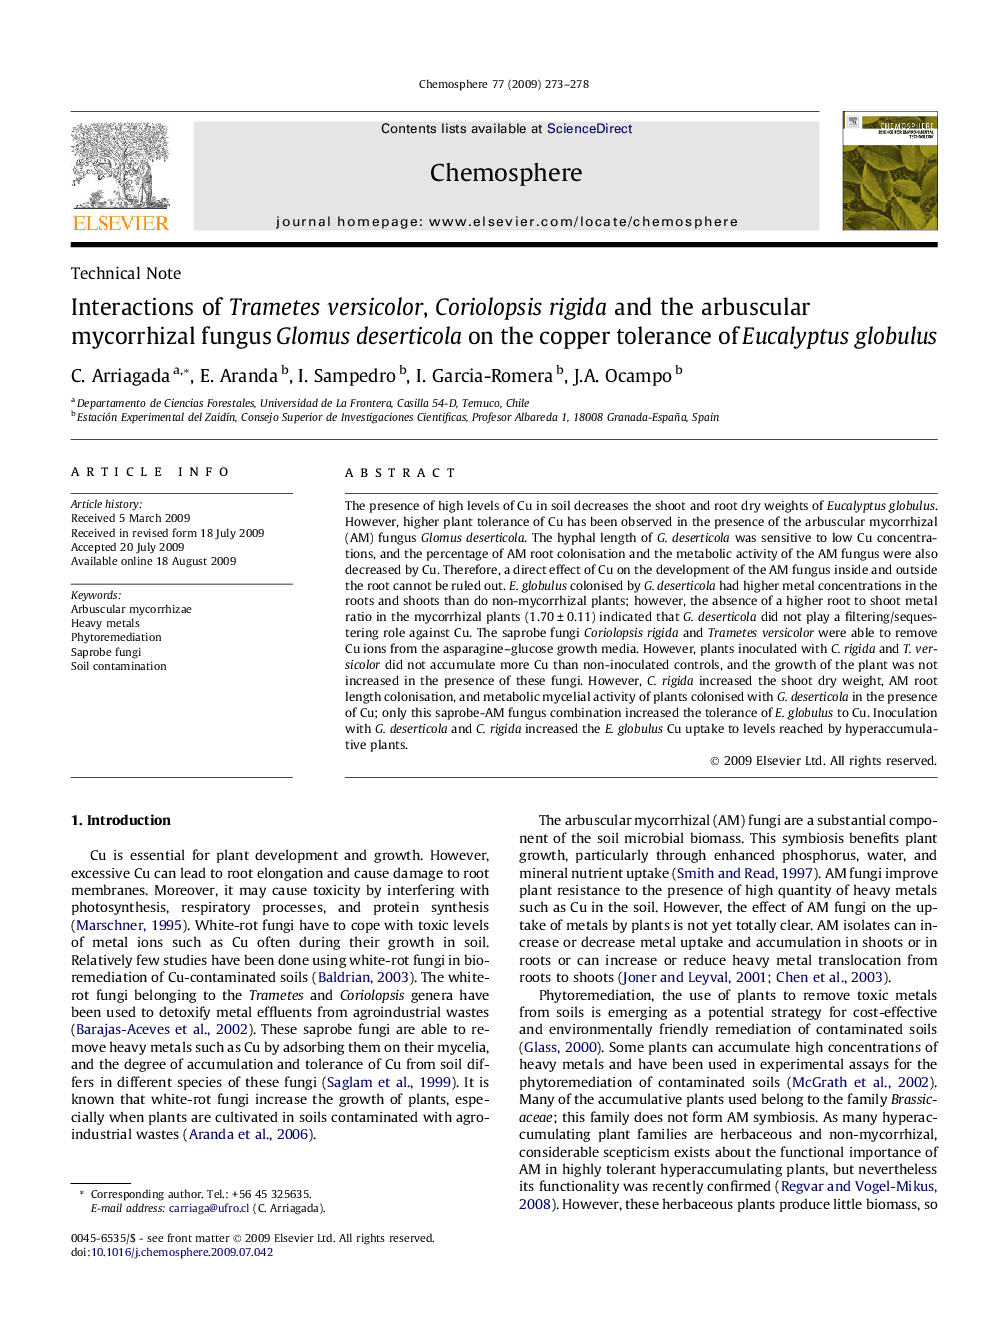 Interactions of Trametes versicolor, Coriolopsis rigida and the arbuscular mycorrhizal fungus Glomus deserticola on the copper tolerance of Eucalyptus globulus